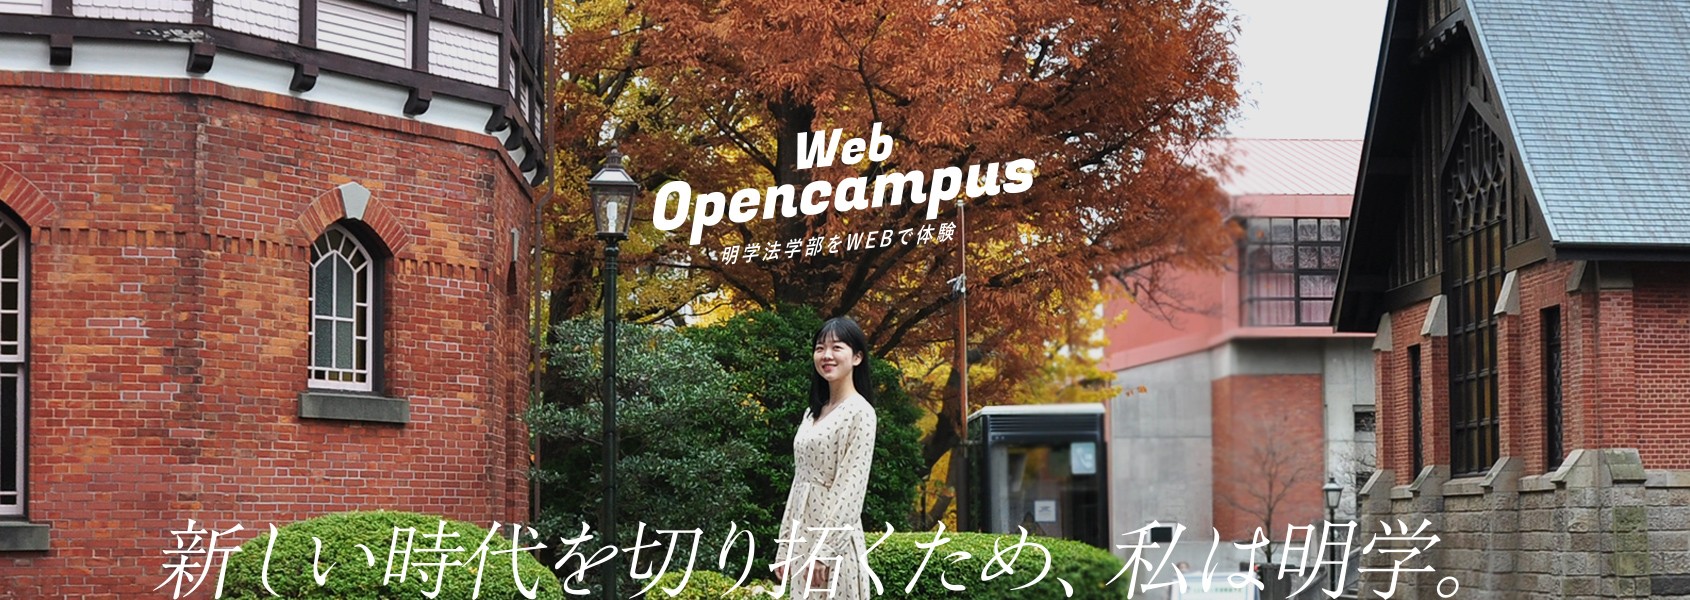 WEBオープンキャンパス 明学法学部をWEBで体験